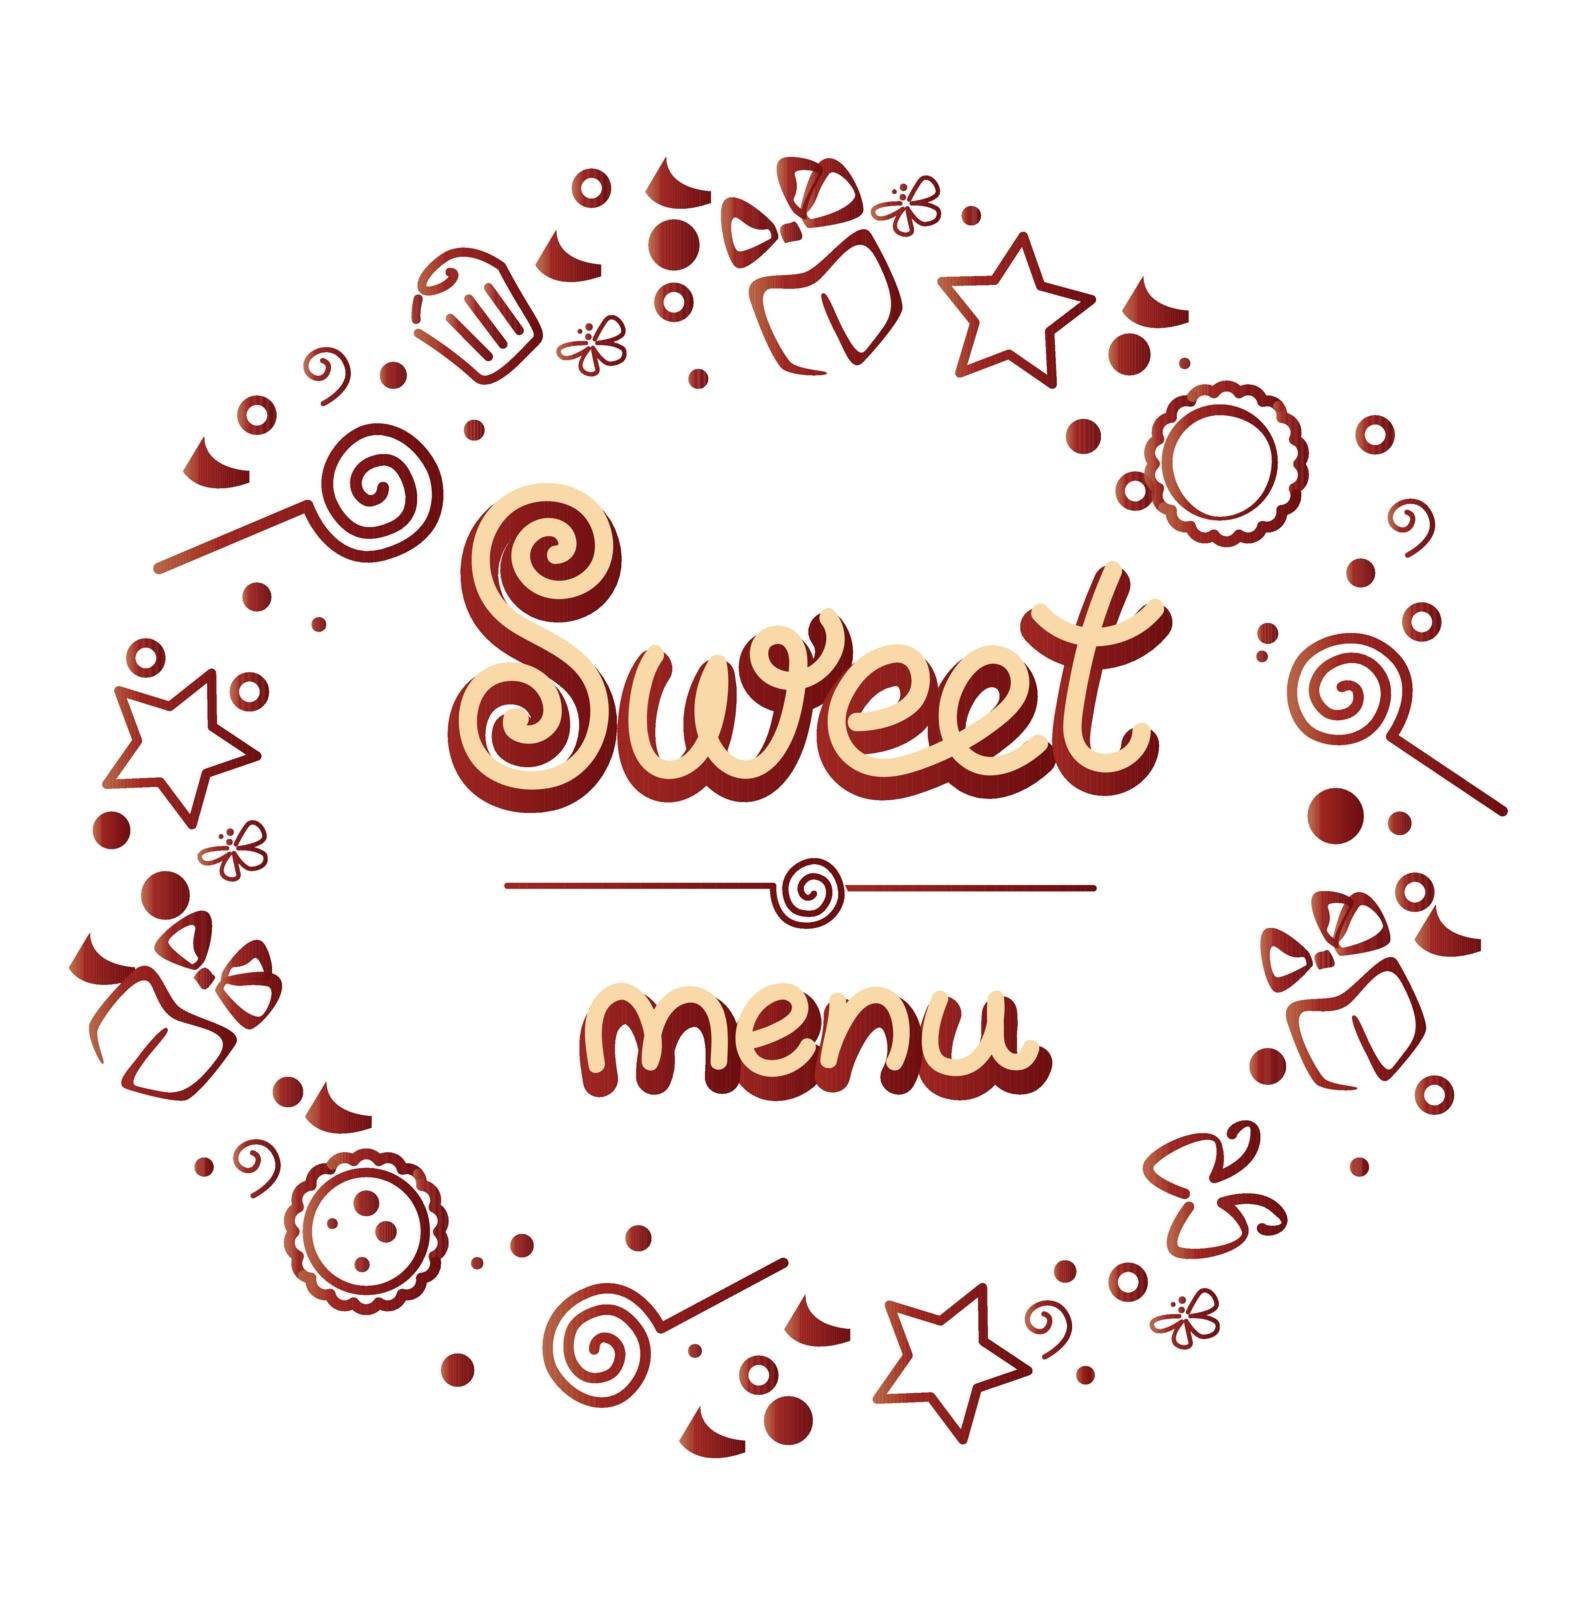 sweet menu